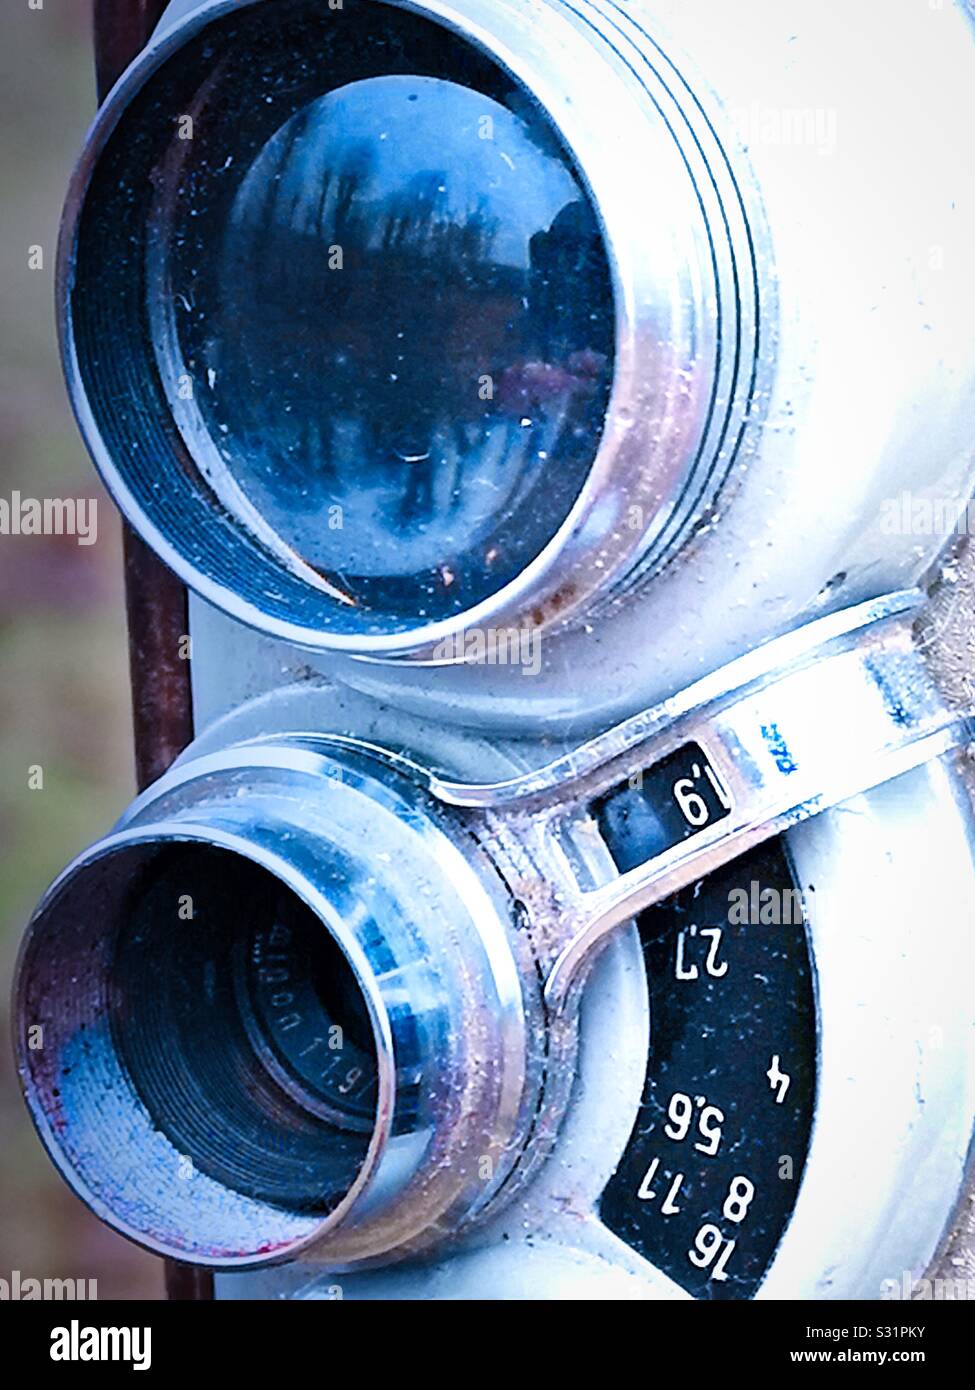 Vintage retro movie camera lenses close up Stock Photo